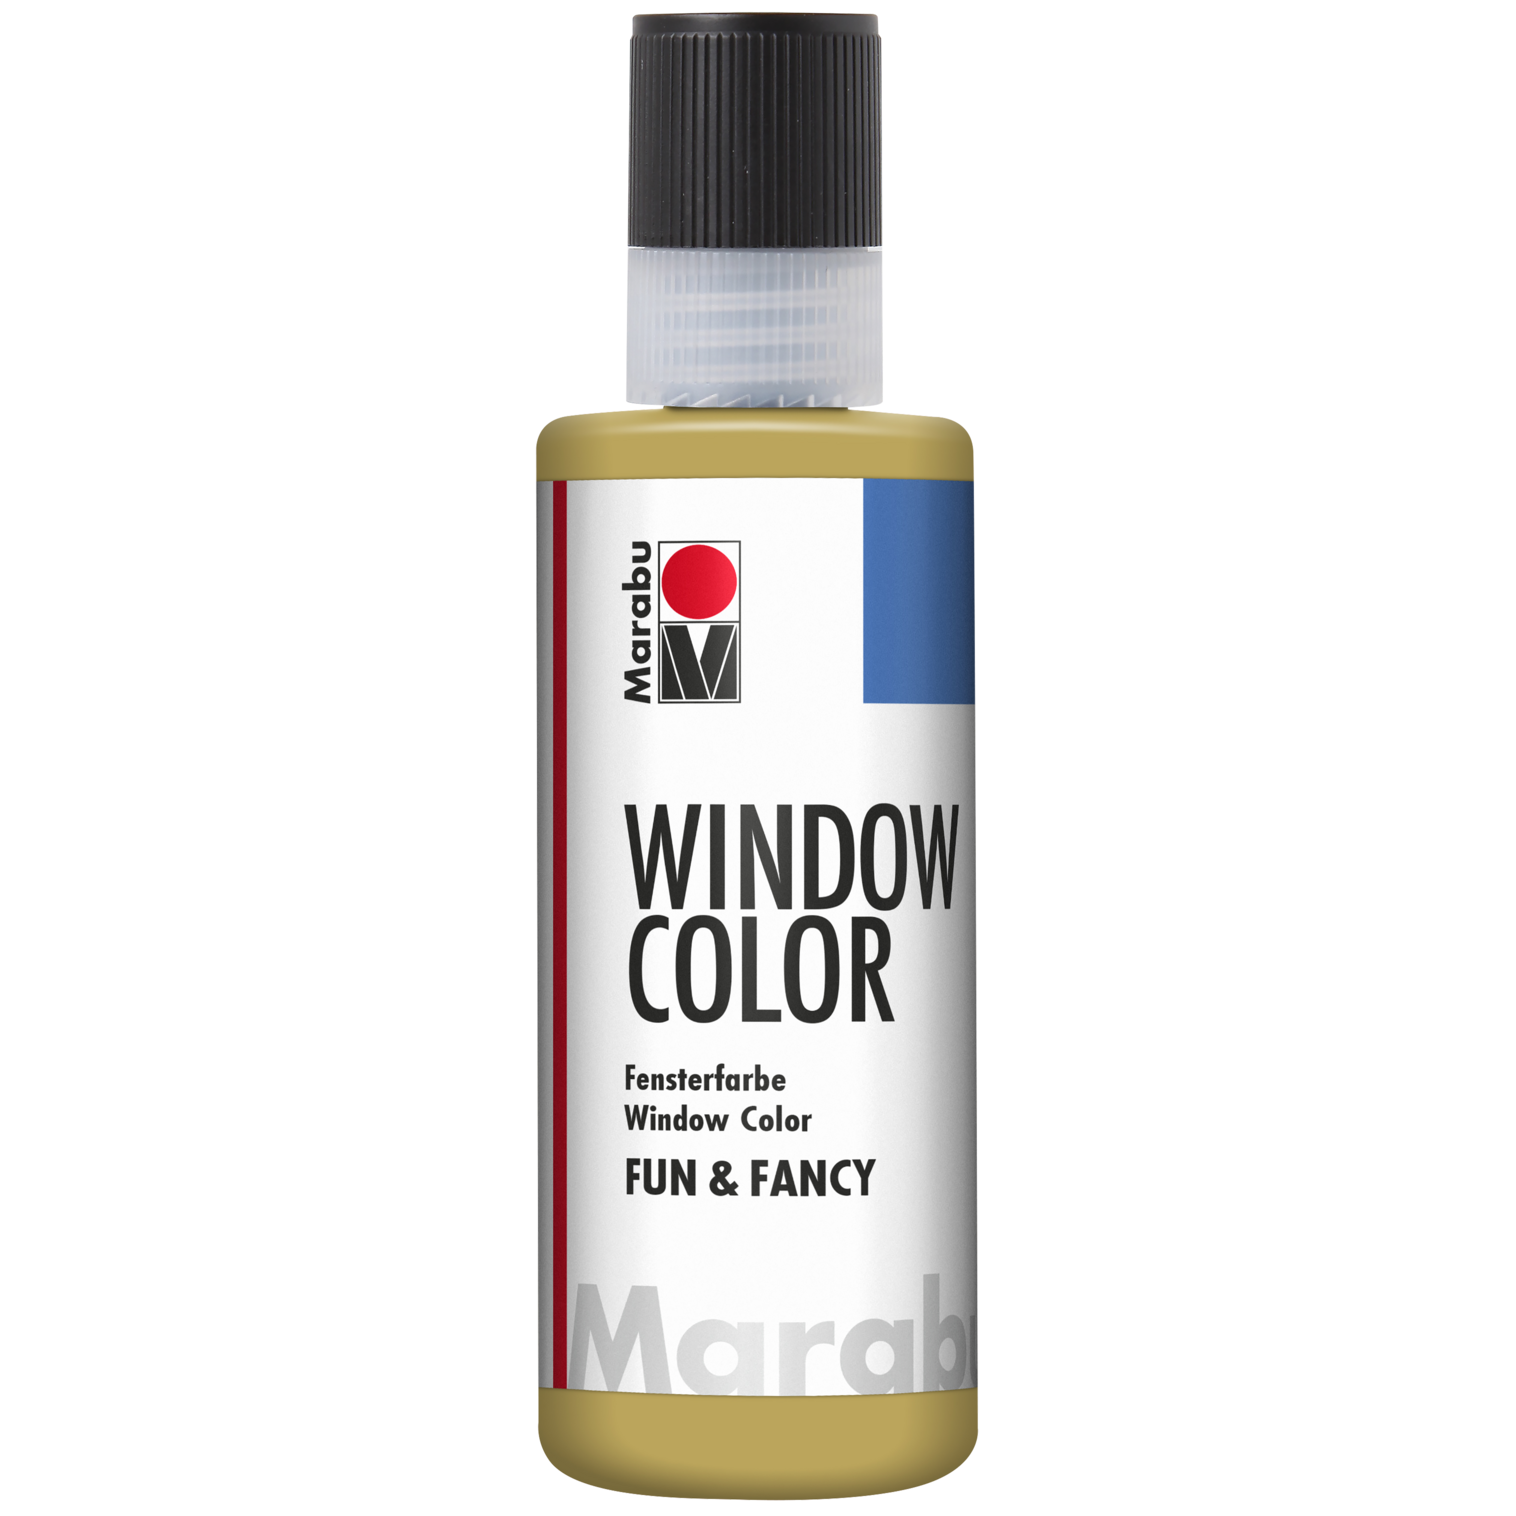 Marabu Window Color fun & fancy, Gold 183, 80 ml